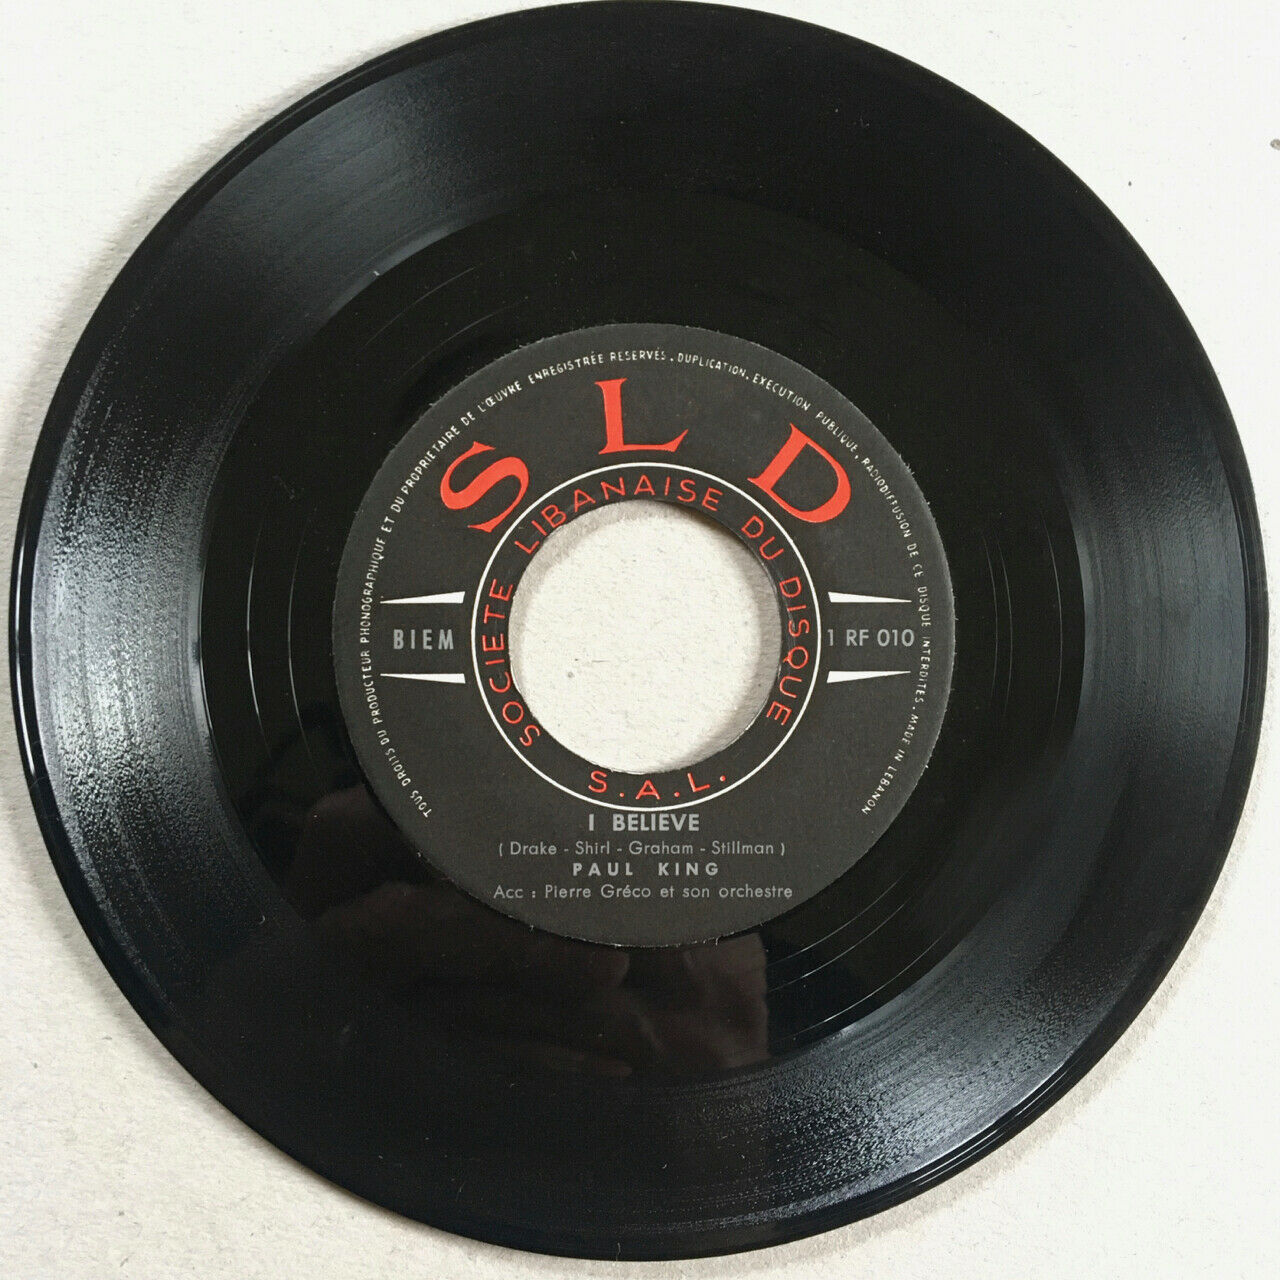 Paul King — I believe / My Bonny — rare 7" 45 rpm — SLD RF 010 — Lebanon — 1964